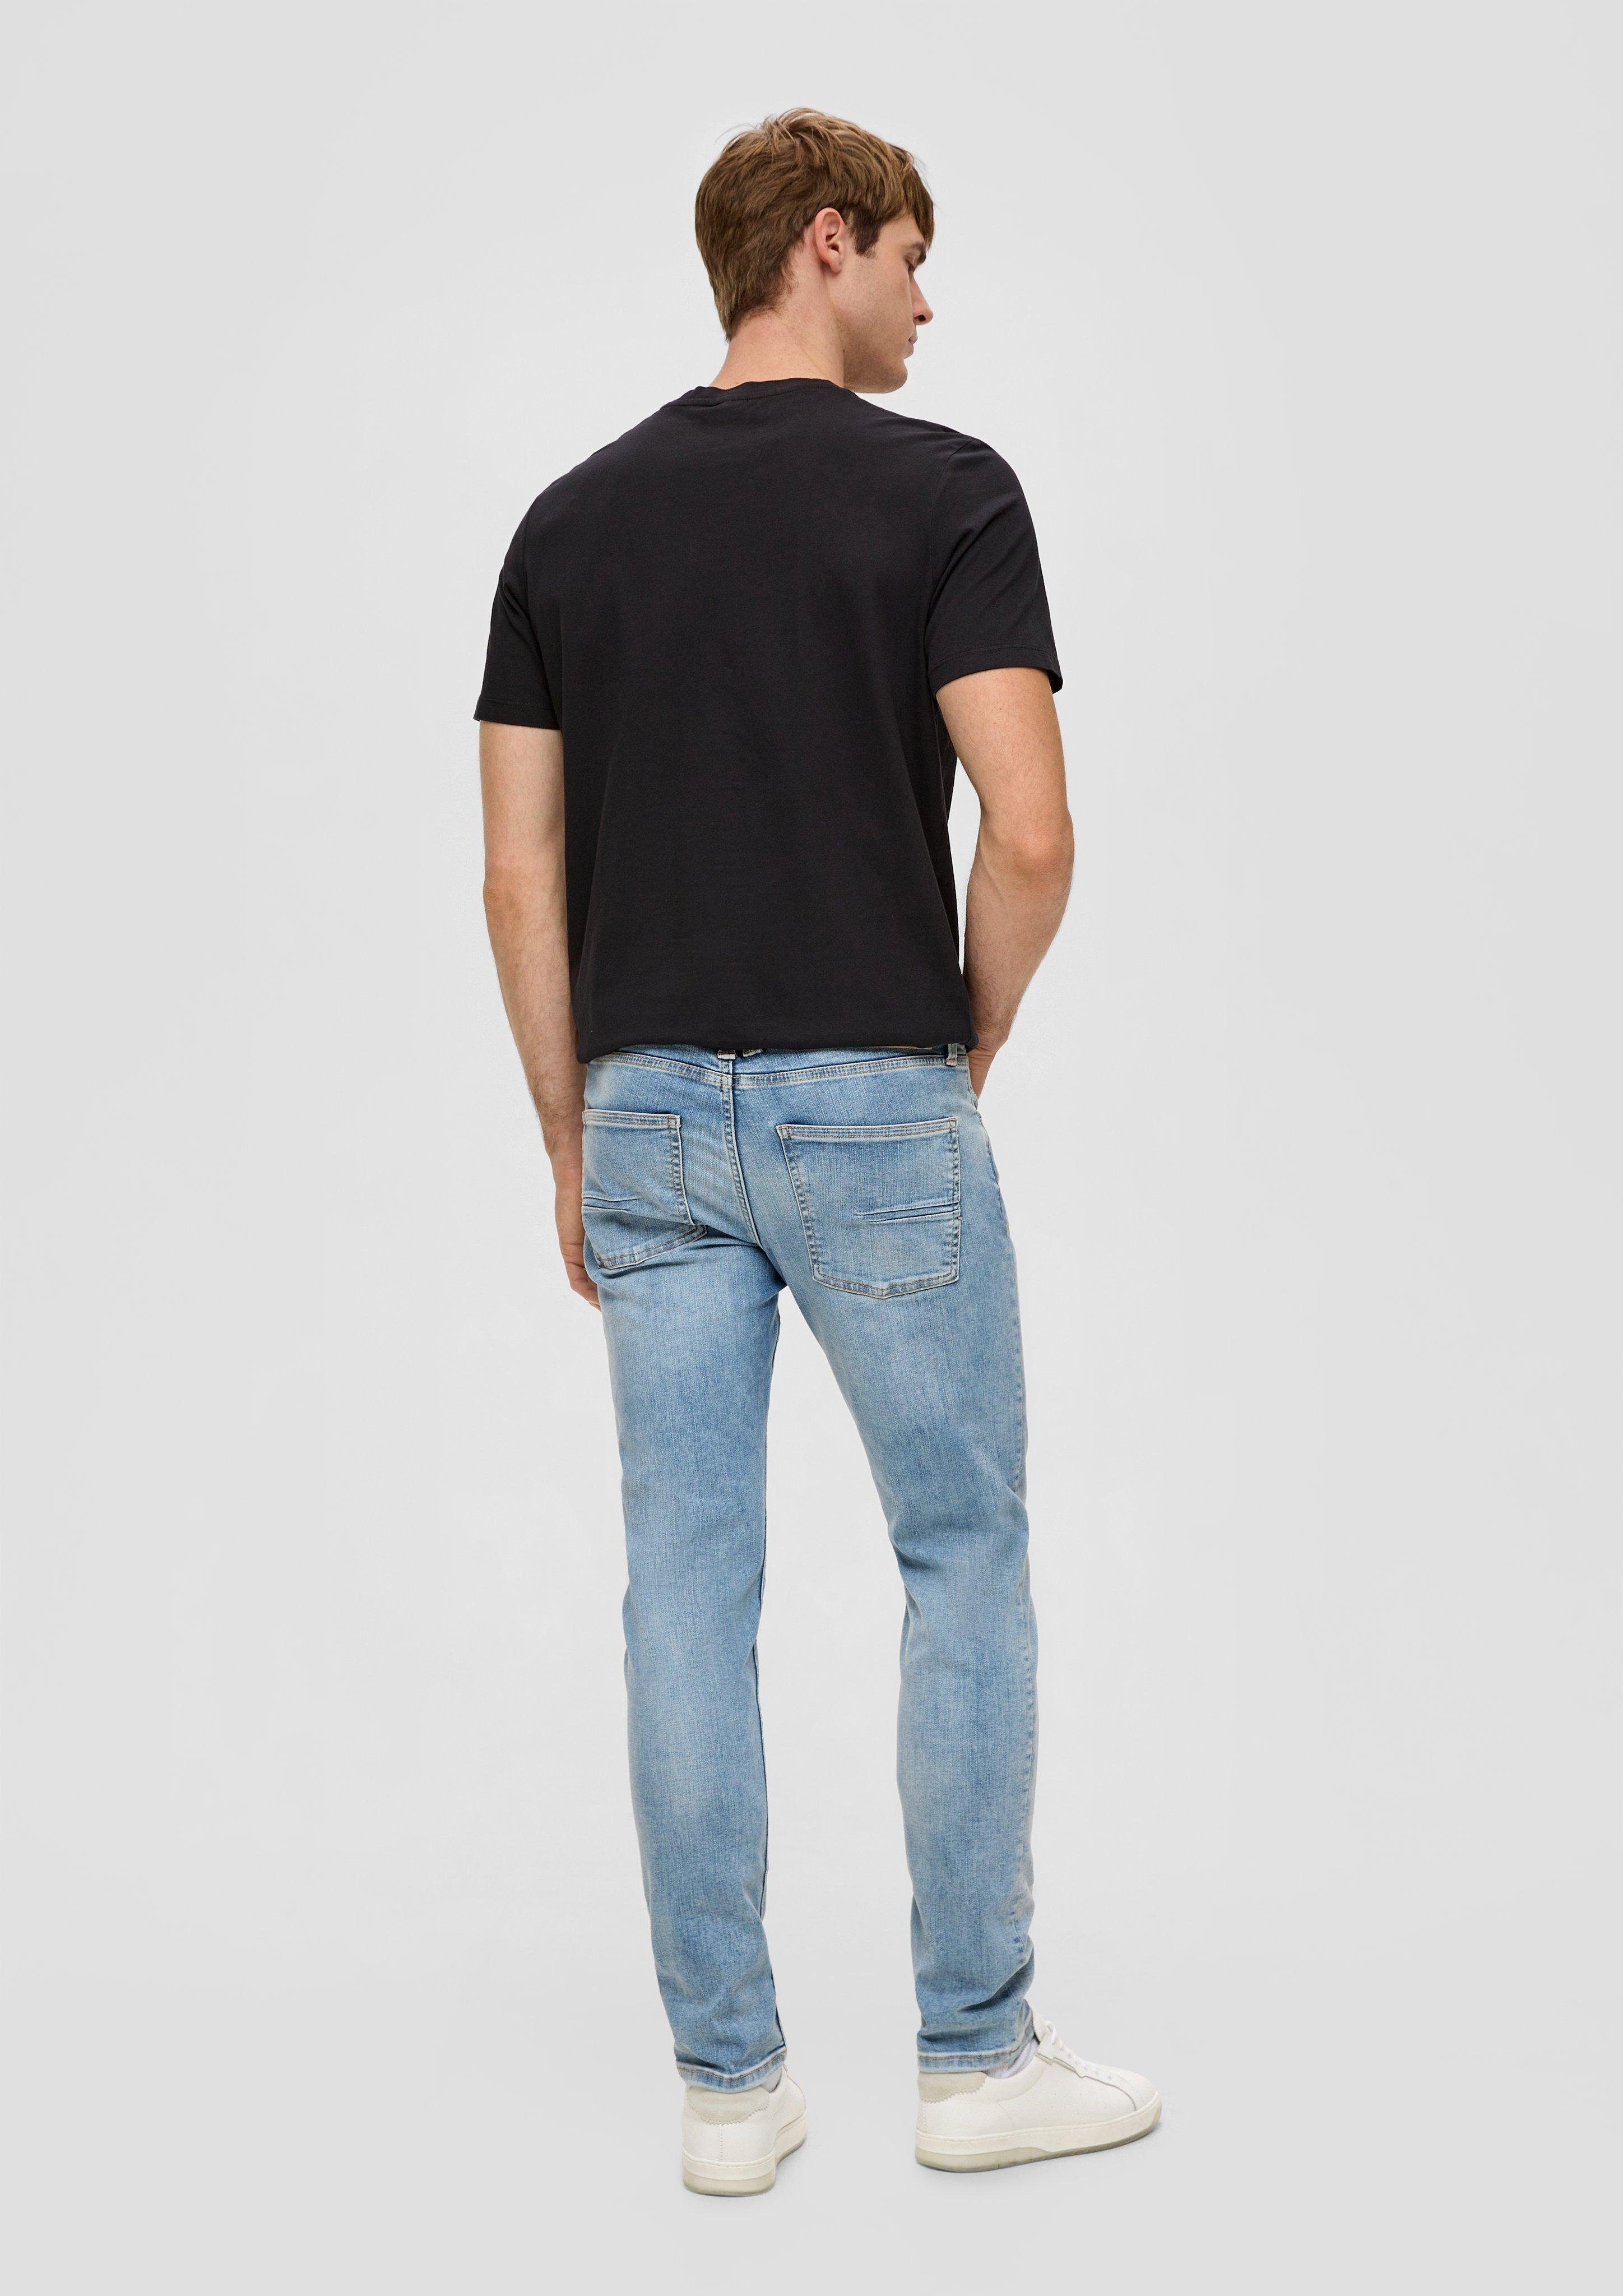 / Stoffhose Slim s.Oliver Jeans Mid Fit Slim Rise Leg / /